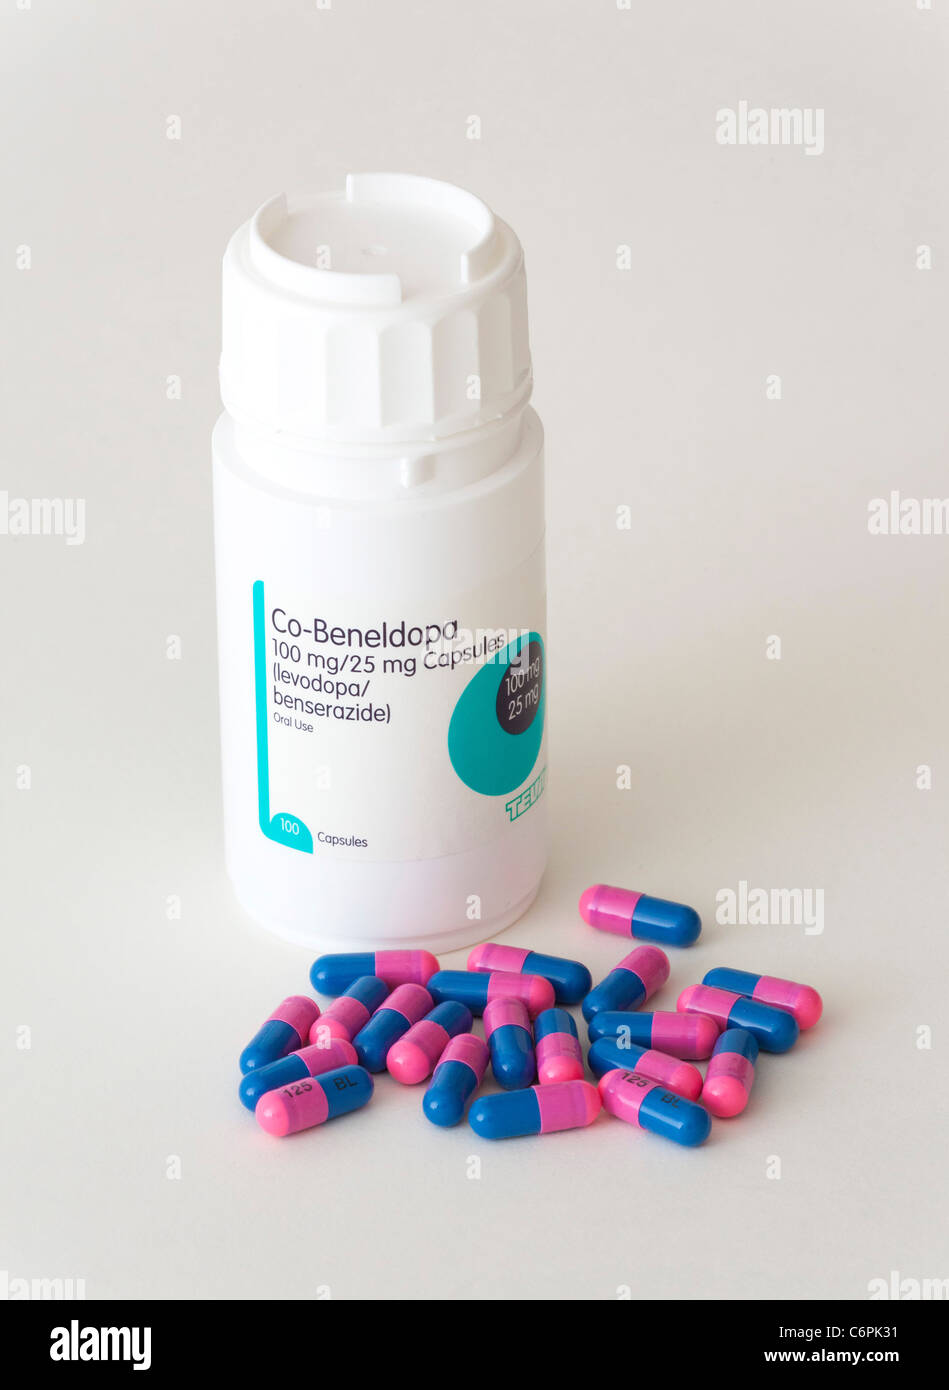 Co-Beneldopa (Levodopa / Benserazide) capsules for treating Parkinson's  disease Stock Photo - Alamy